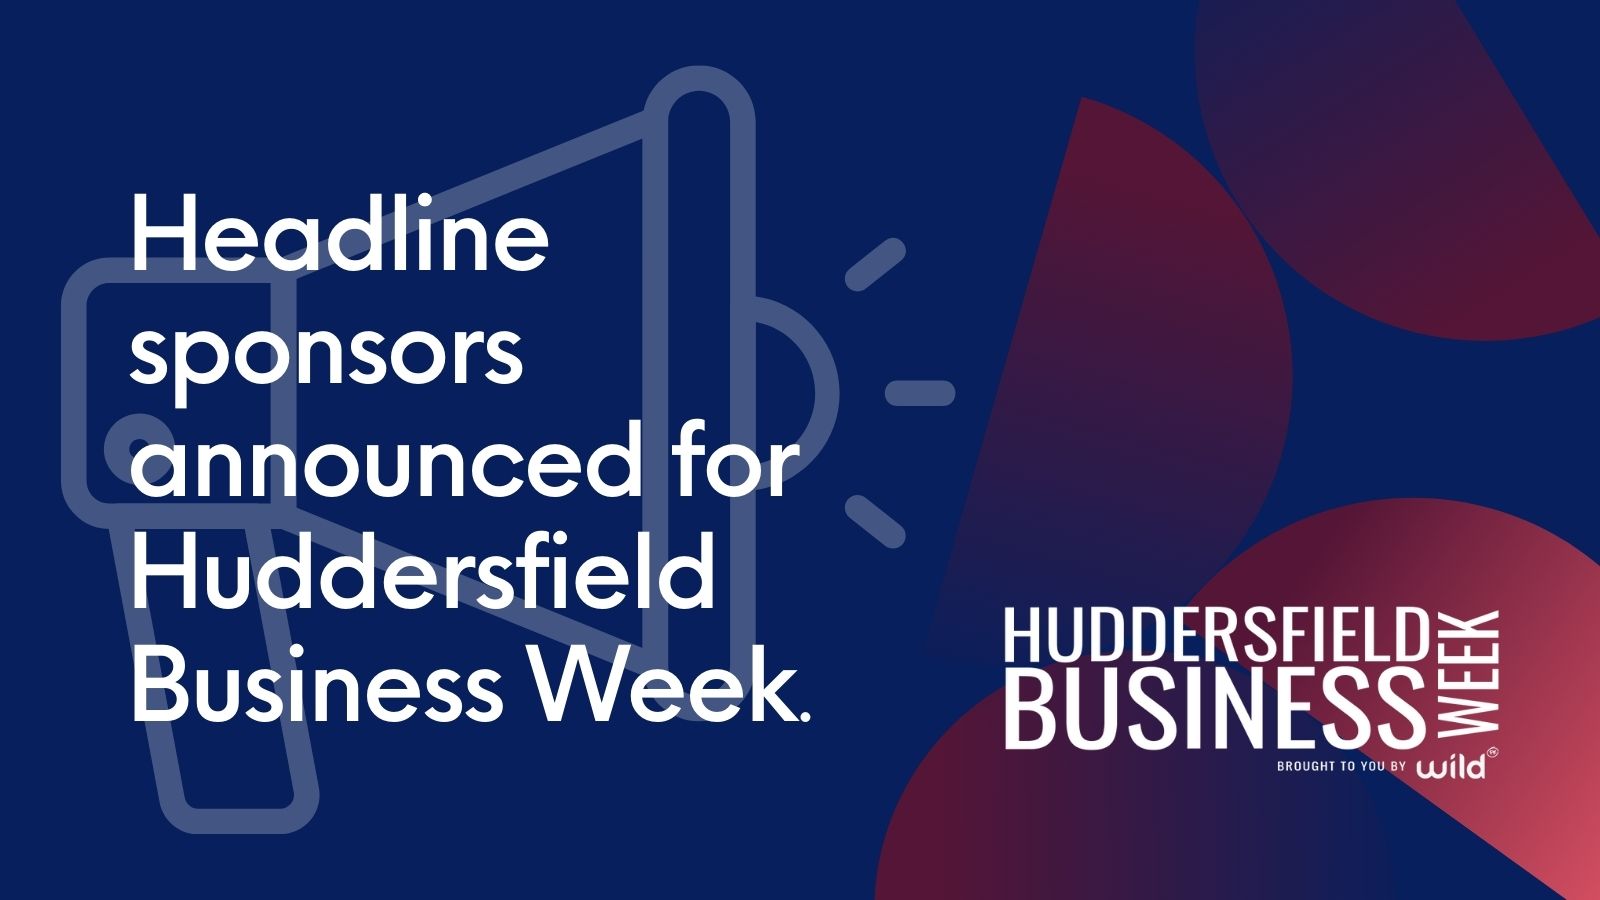 Headline sponsors announced for Huddersfield Business Week